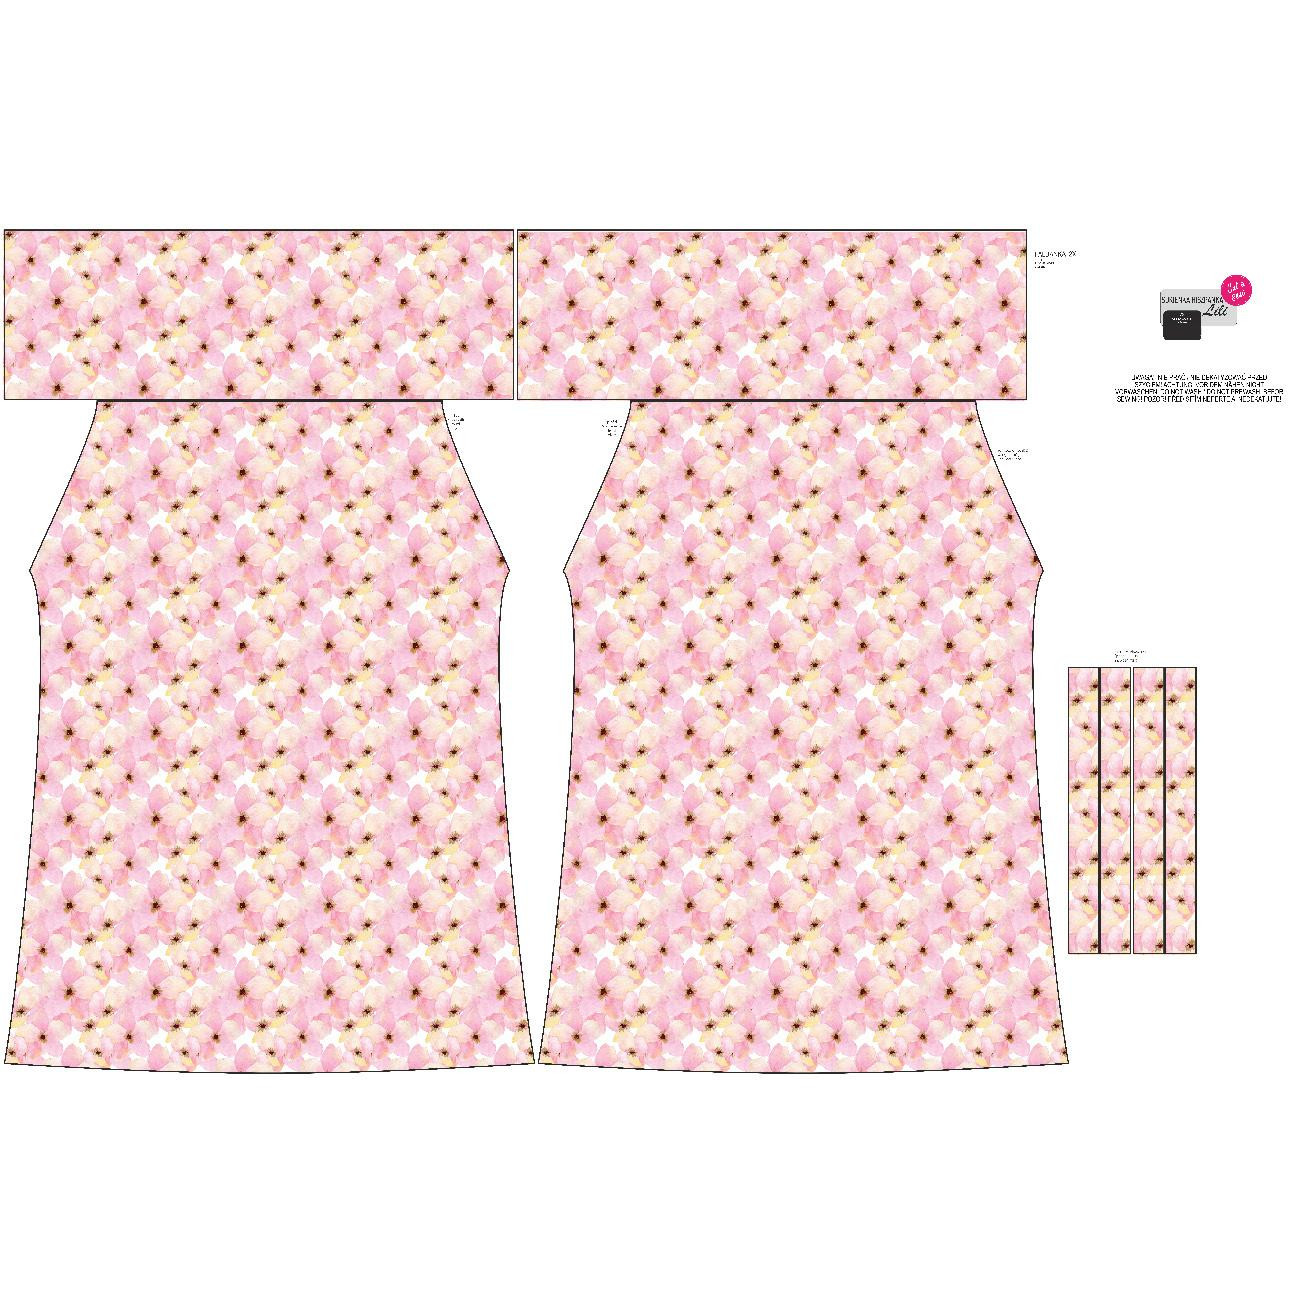 Bardot neckline dress (LILI) - PINK FLOWERS (IN THE MEADOW) - sewing set